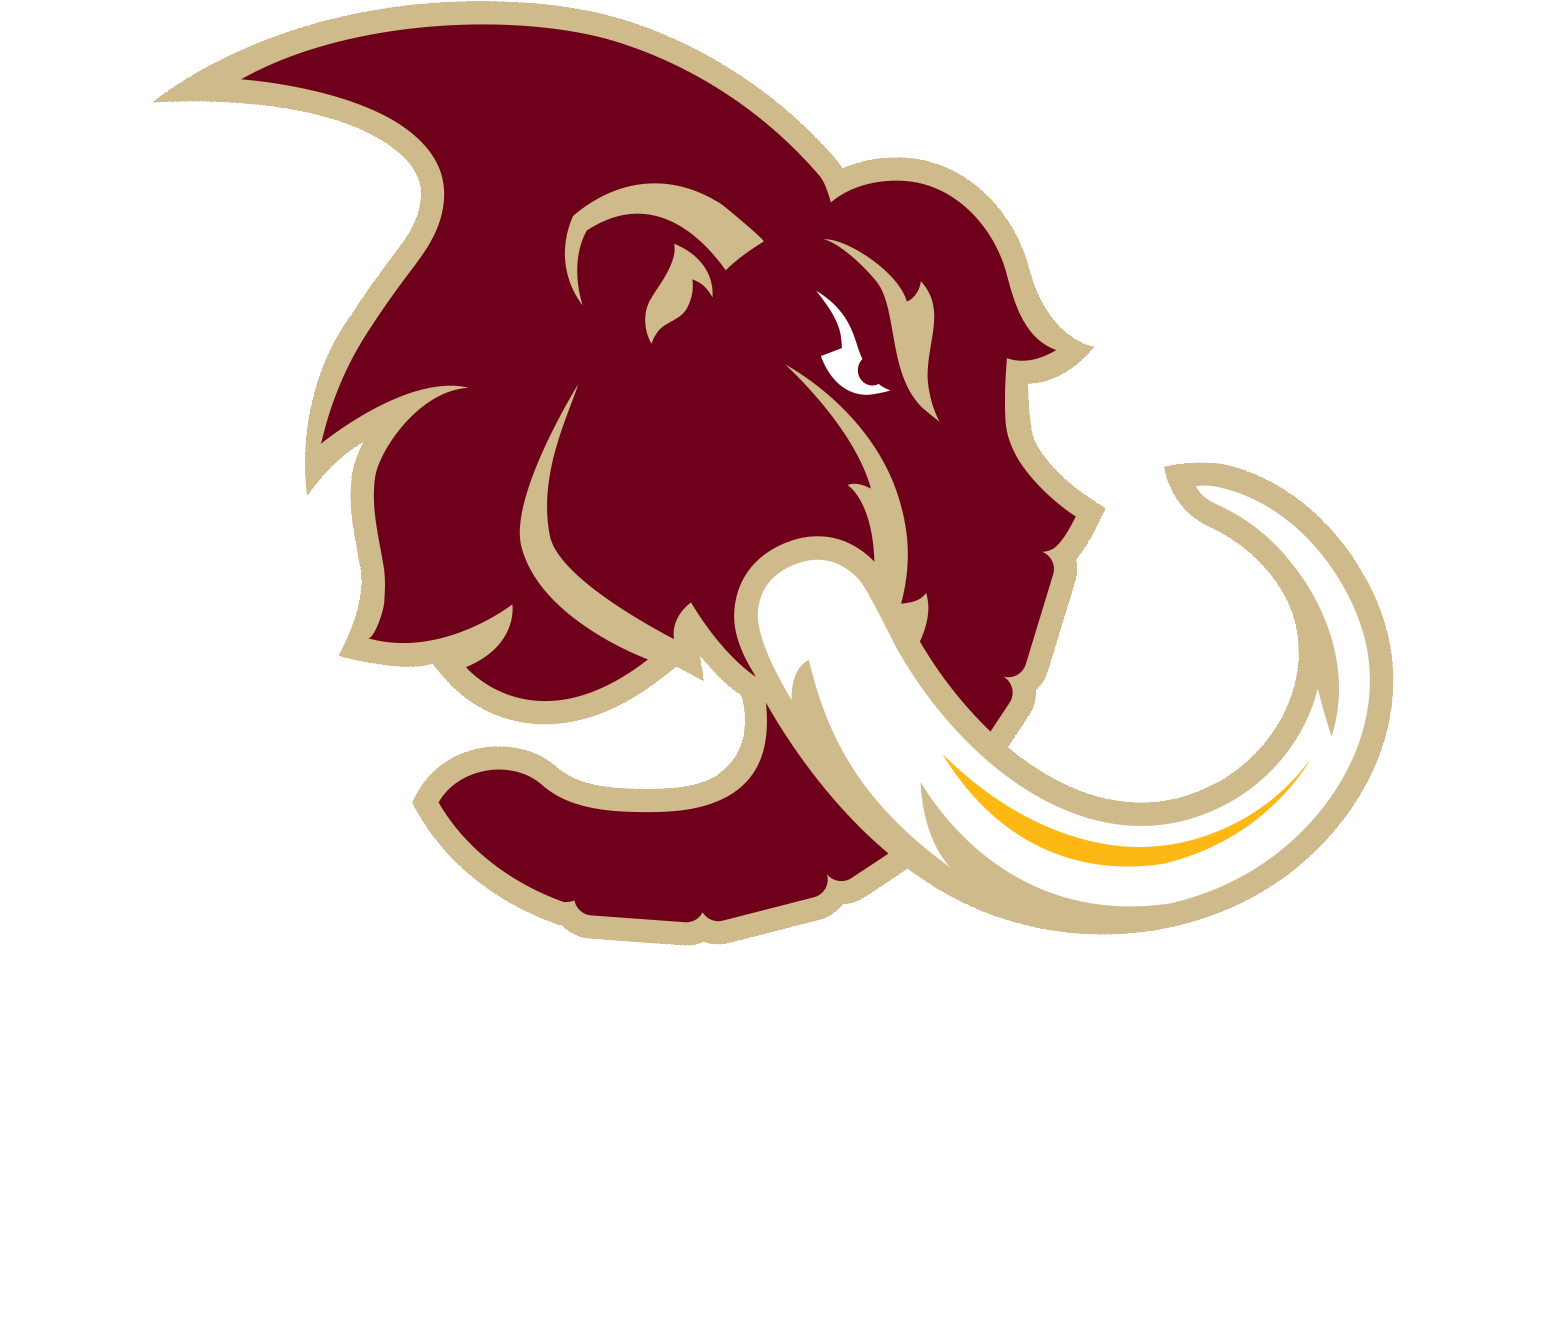 Maine Motorsports Xtreme International Ice Racing - Maine Mammoths (1602x1344)